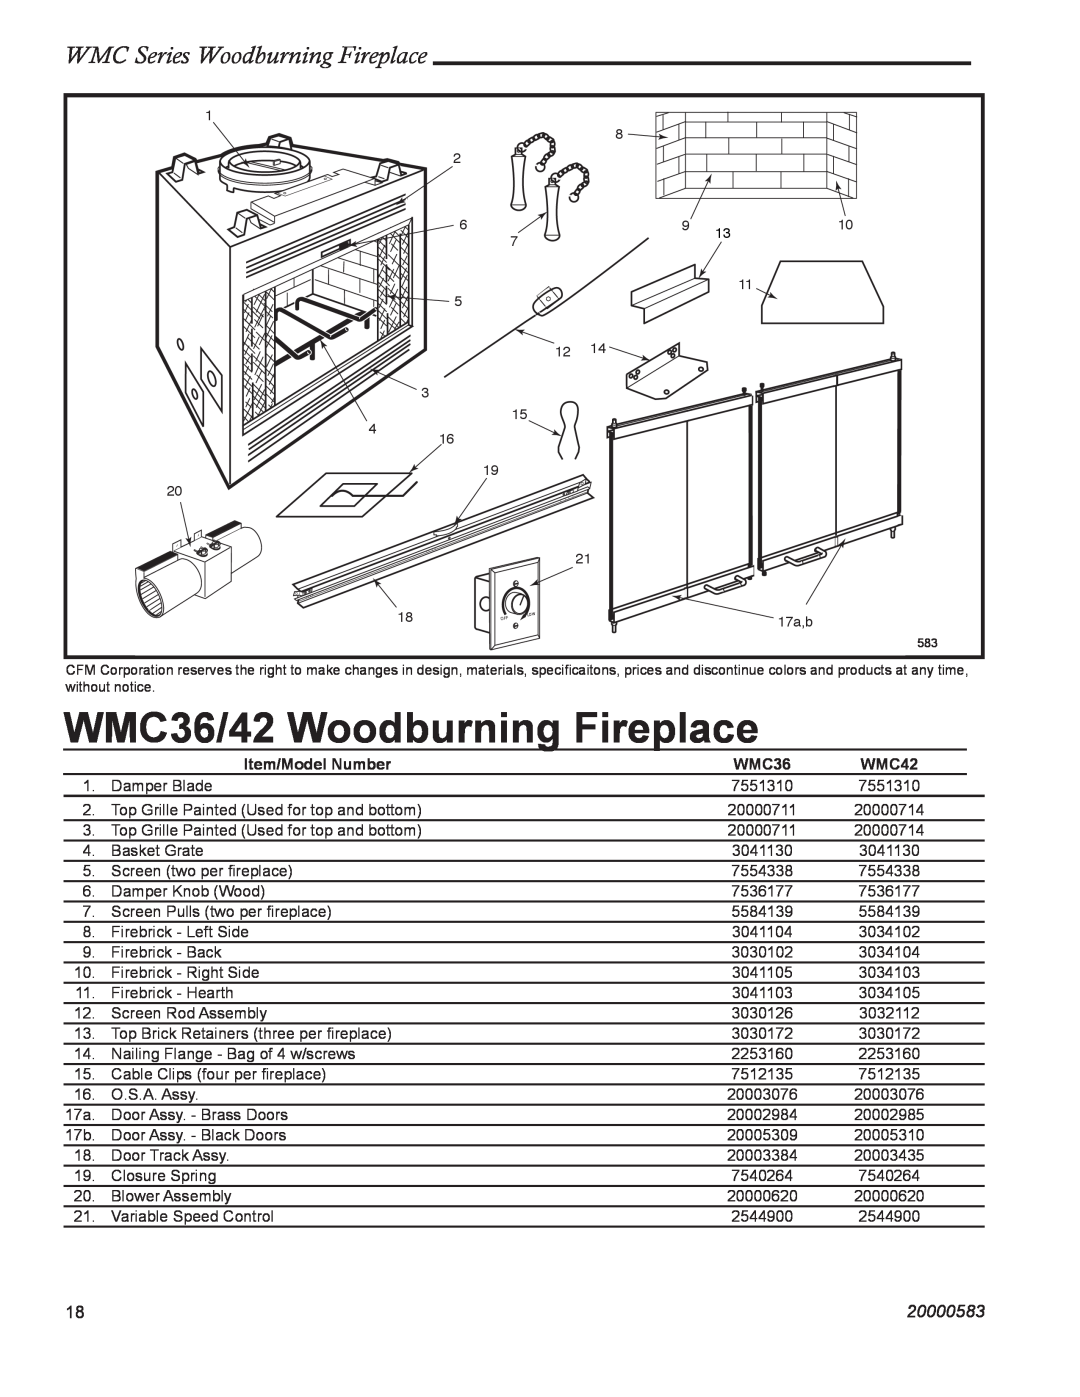 CFM Corporation WMC36 WMC42 WMC36/42 Woodburning Fireplace, WMC Series Woodburning Fireplace, 20000583, Item/Model Number 